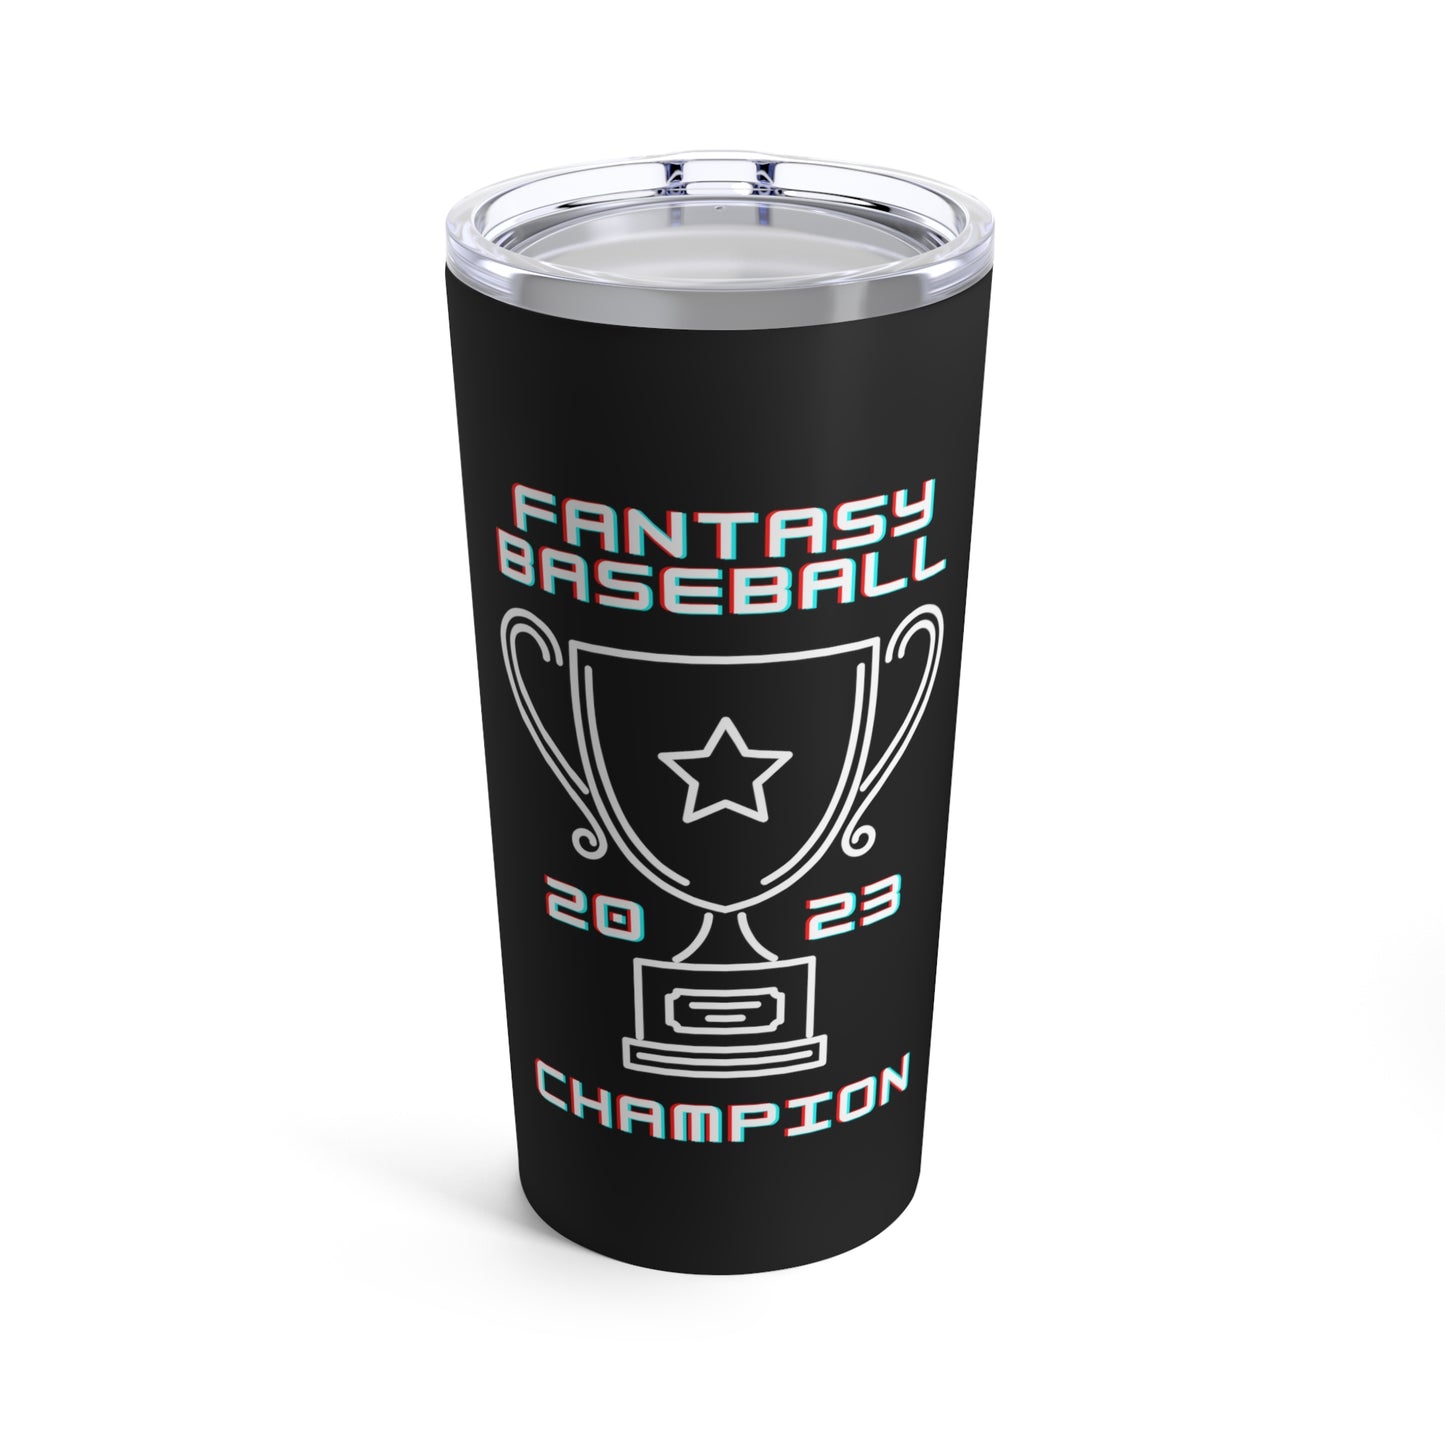 2023 Fantasy Baseball Champion Fantasy Champ Tumbler 20oz Beverage Container